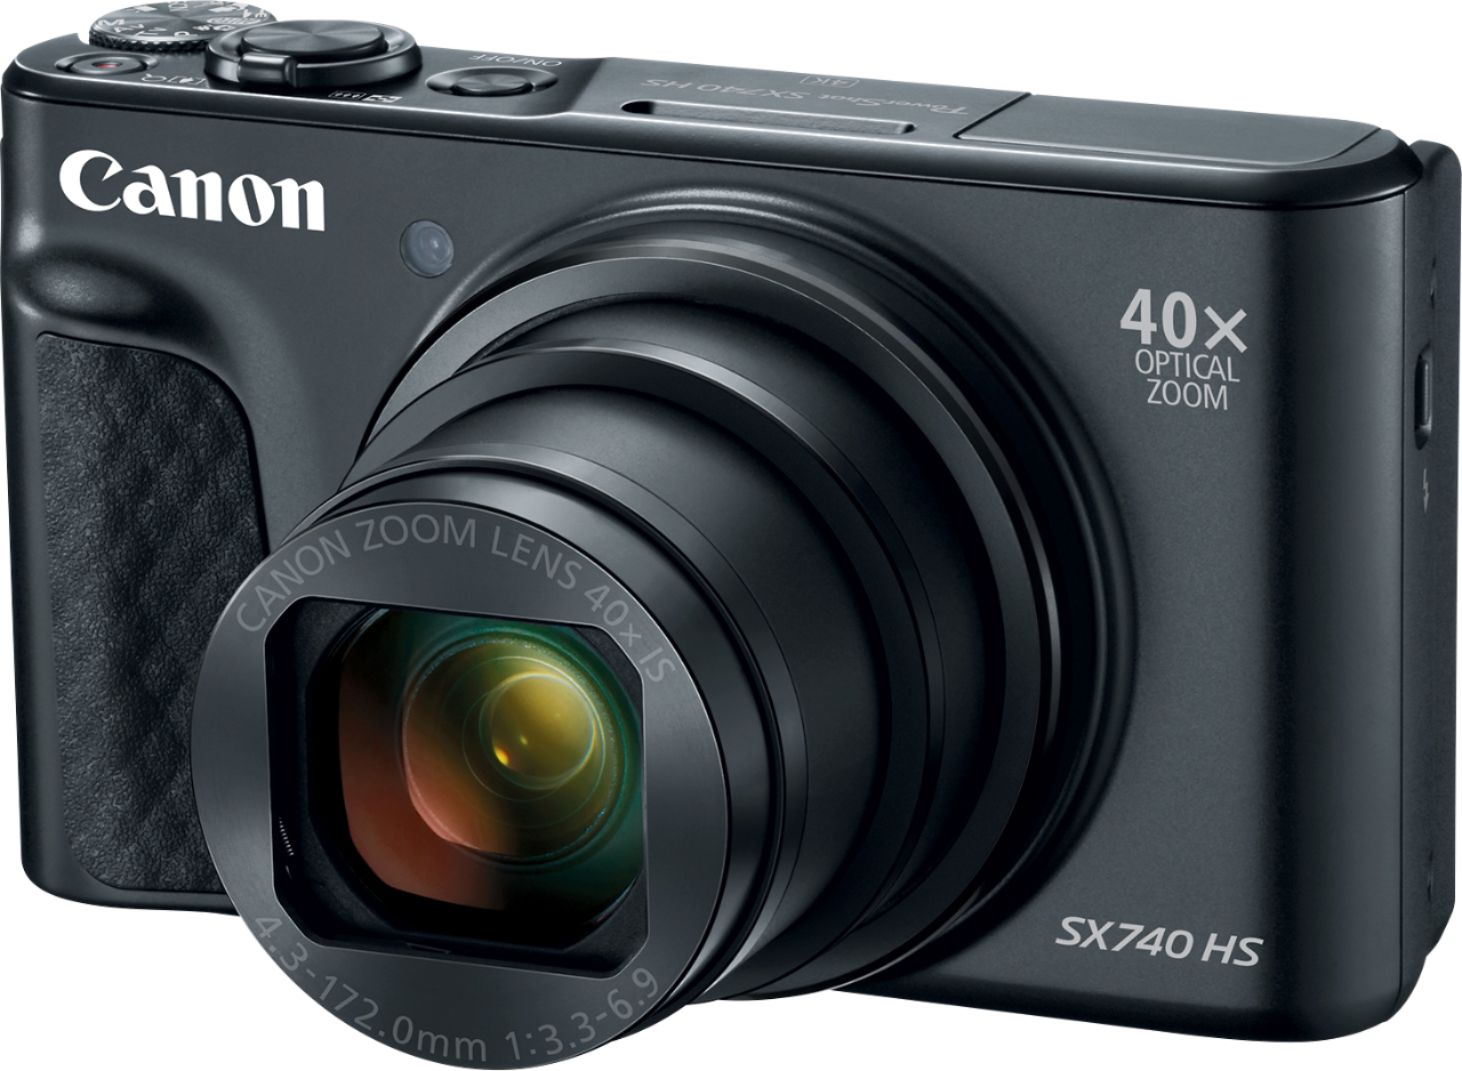 Best Buy: Canon PowerShot SX740 HS 20.3-Megapixel Digital Camera